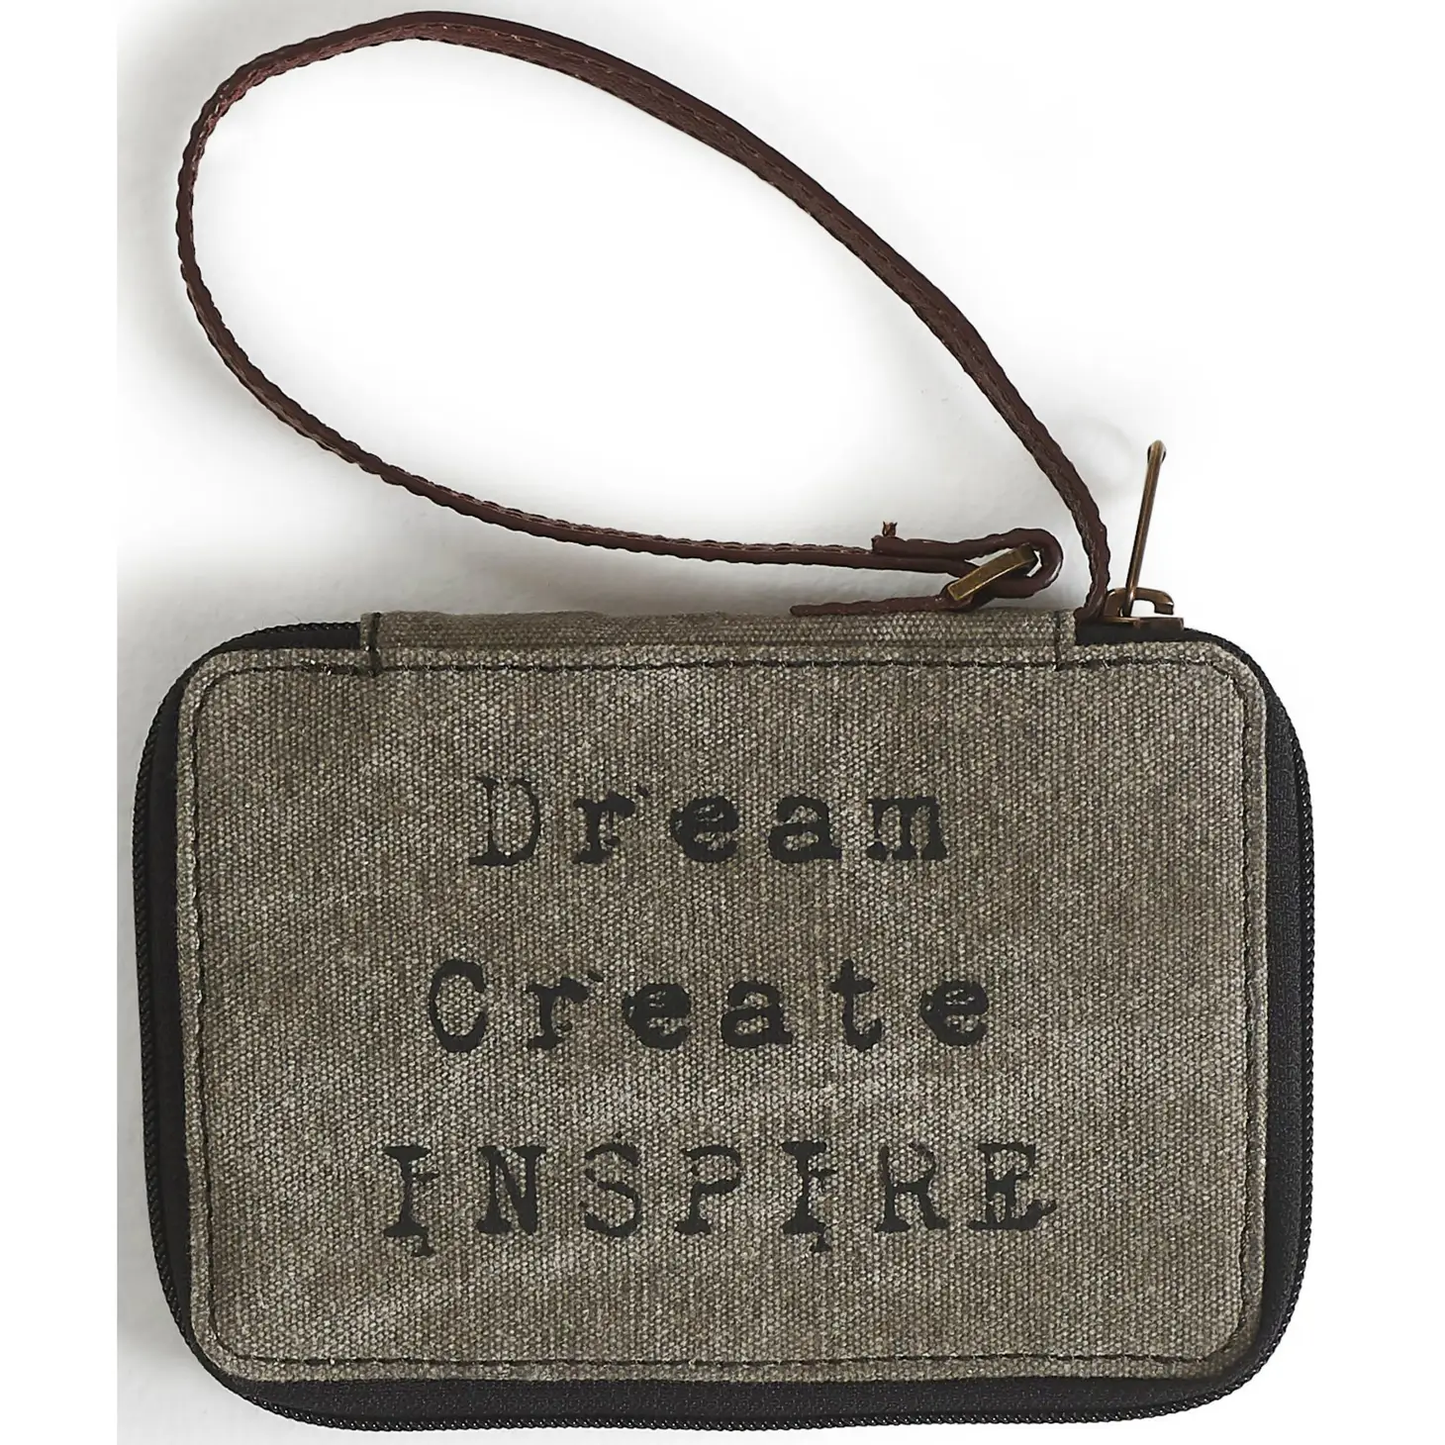 Dream Create Zip Canvas Wallet